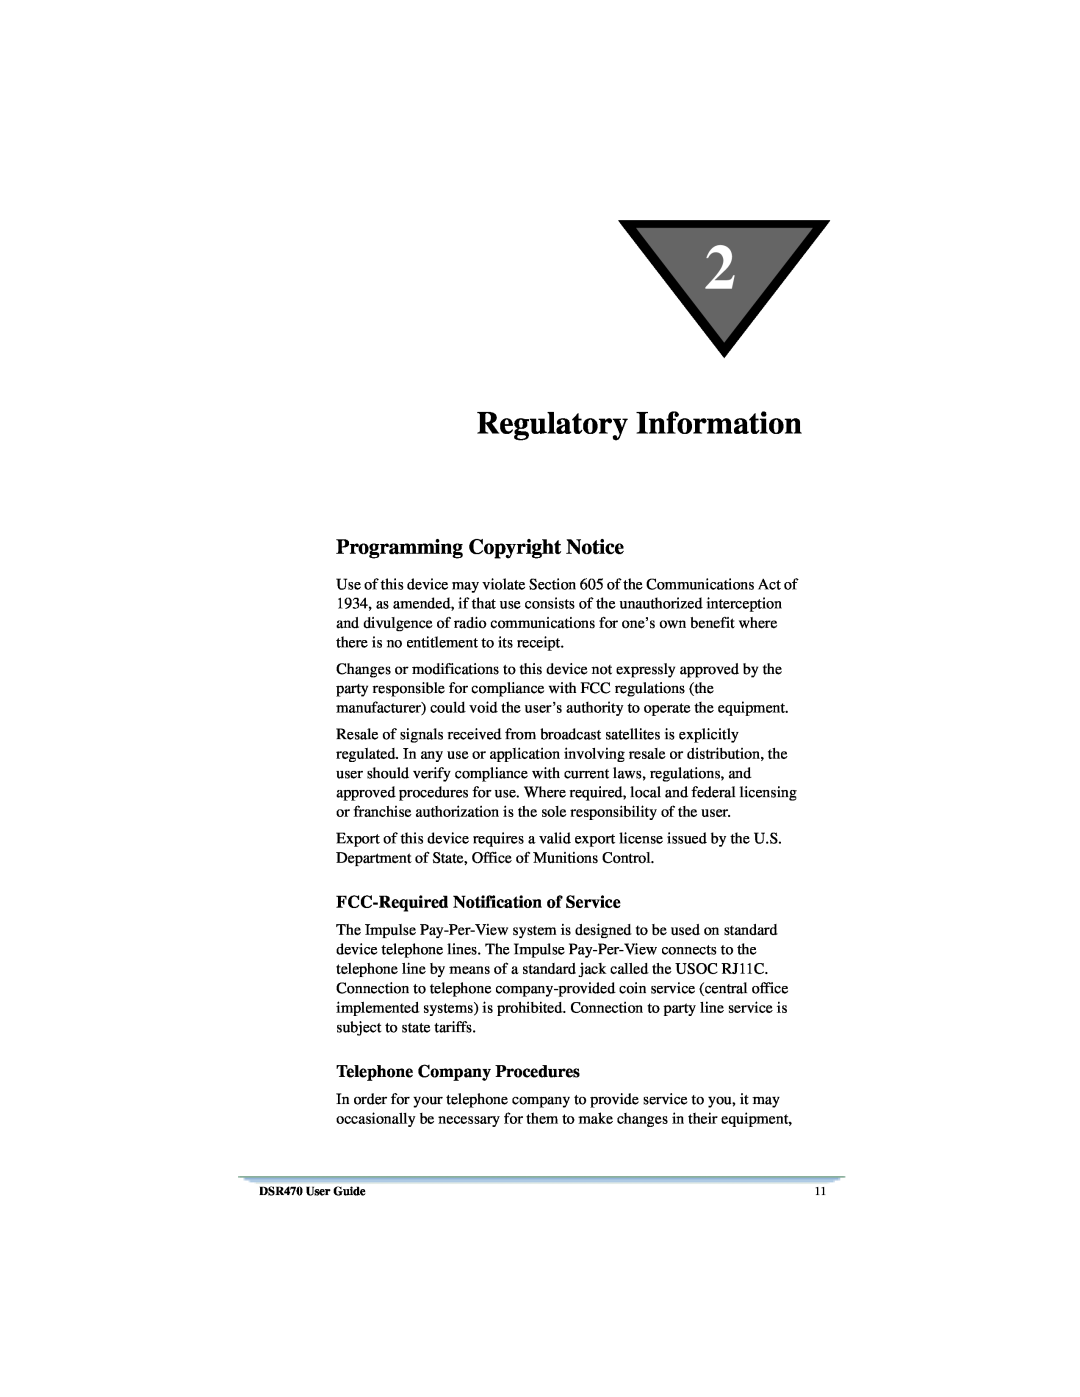 Univex DSR470 manual Regulatory Information, Programming Copyright Notice, FCC-RequiredNotification of Service 